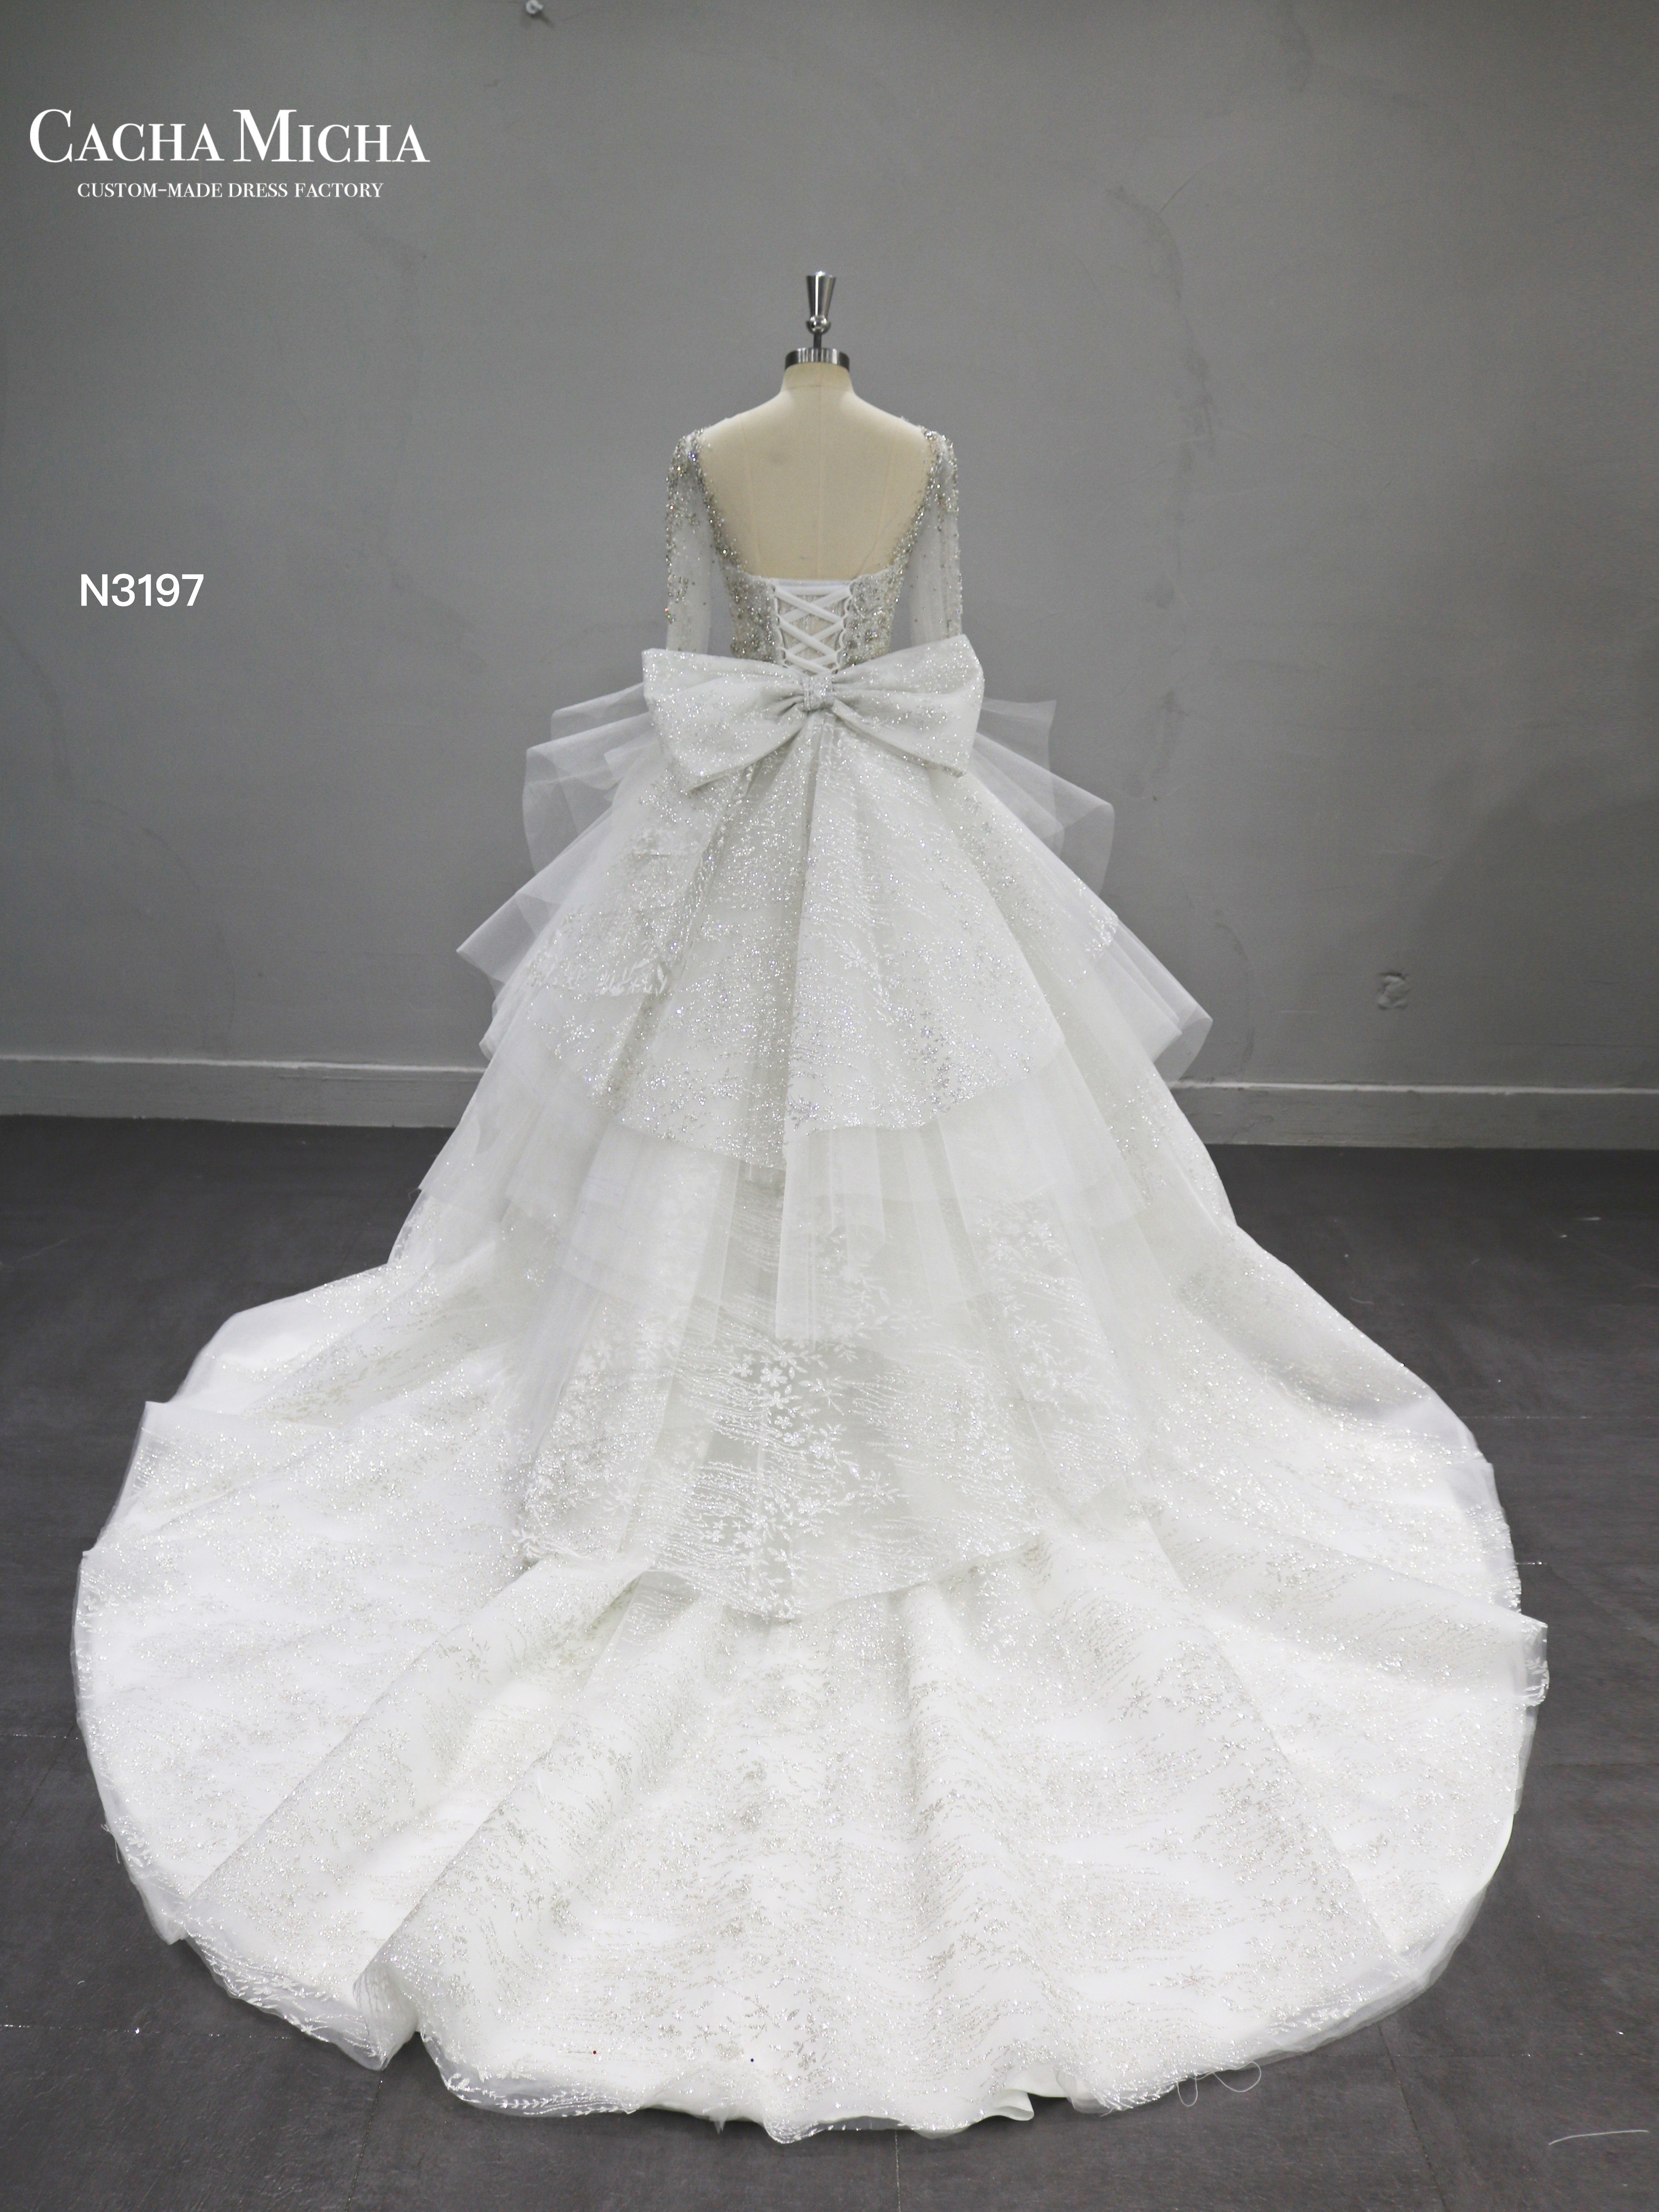 Silver Hand Beaded Shinny Glitter Wedding Dress N3197